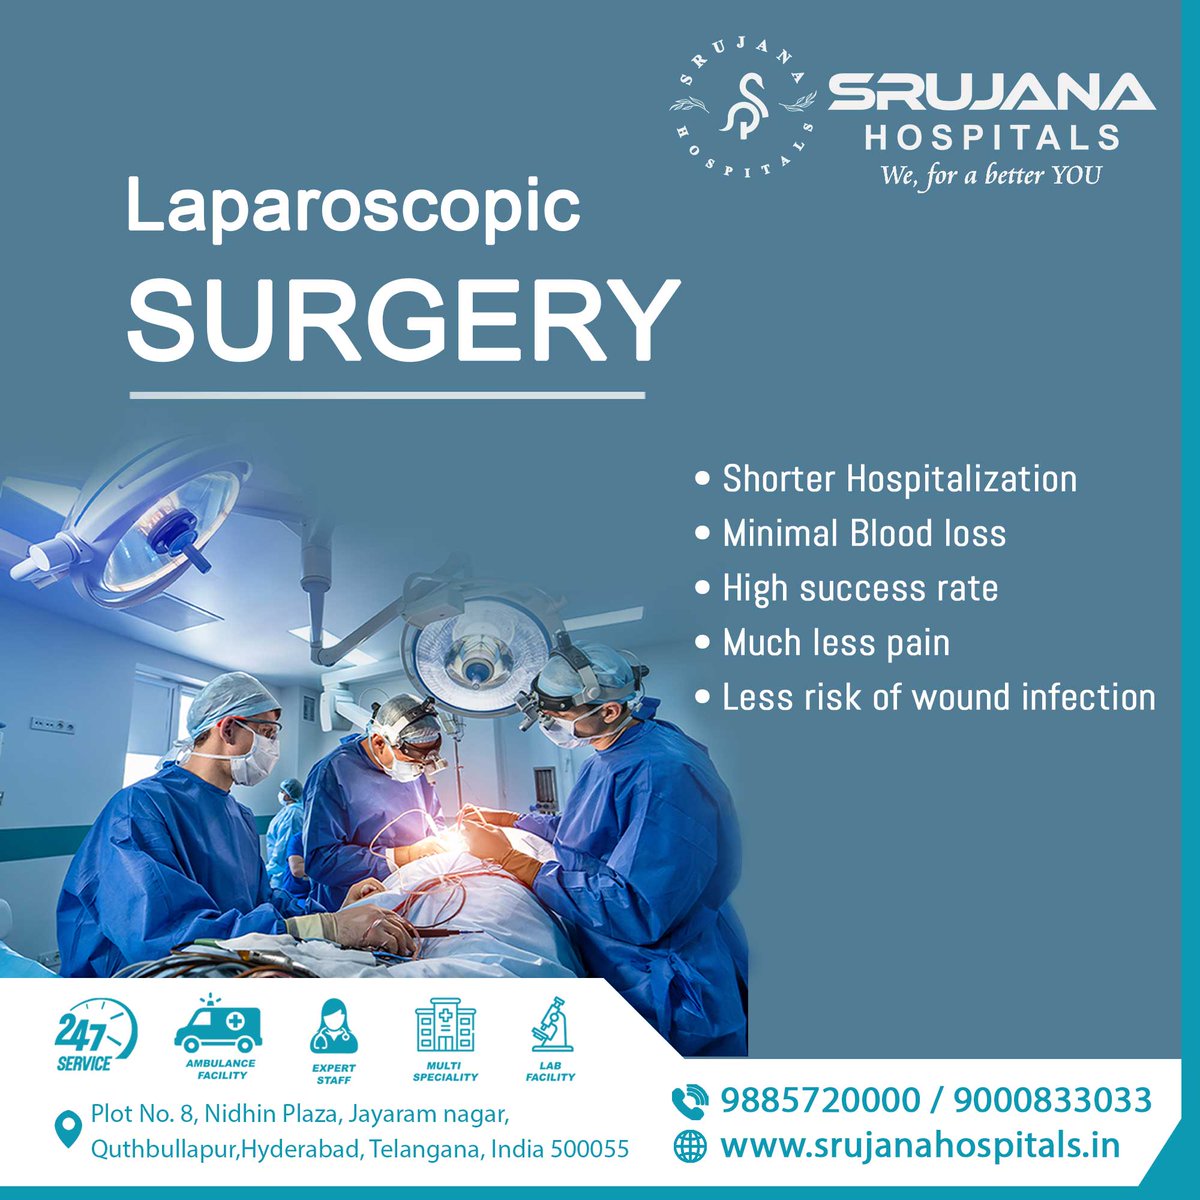 Here are some benefits of laparoscopic surgery:

#laparoscopy #surgery #laparoscopicsurgery #surgeon #endometriosis #laparoscopia #doctor #laparoscopic #minimalbloodloss #lesspain #lessrisk #bookappointment #doctor #doctorappointment #srujanahospital